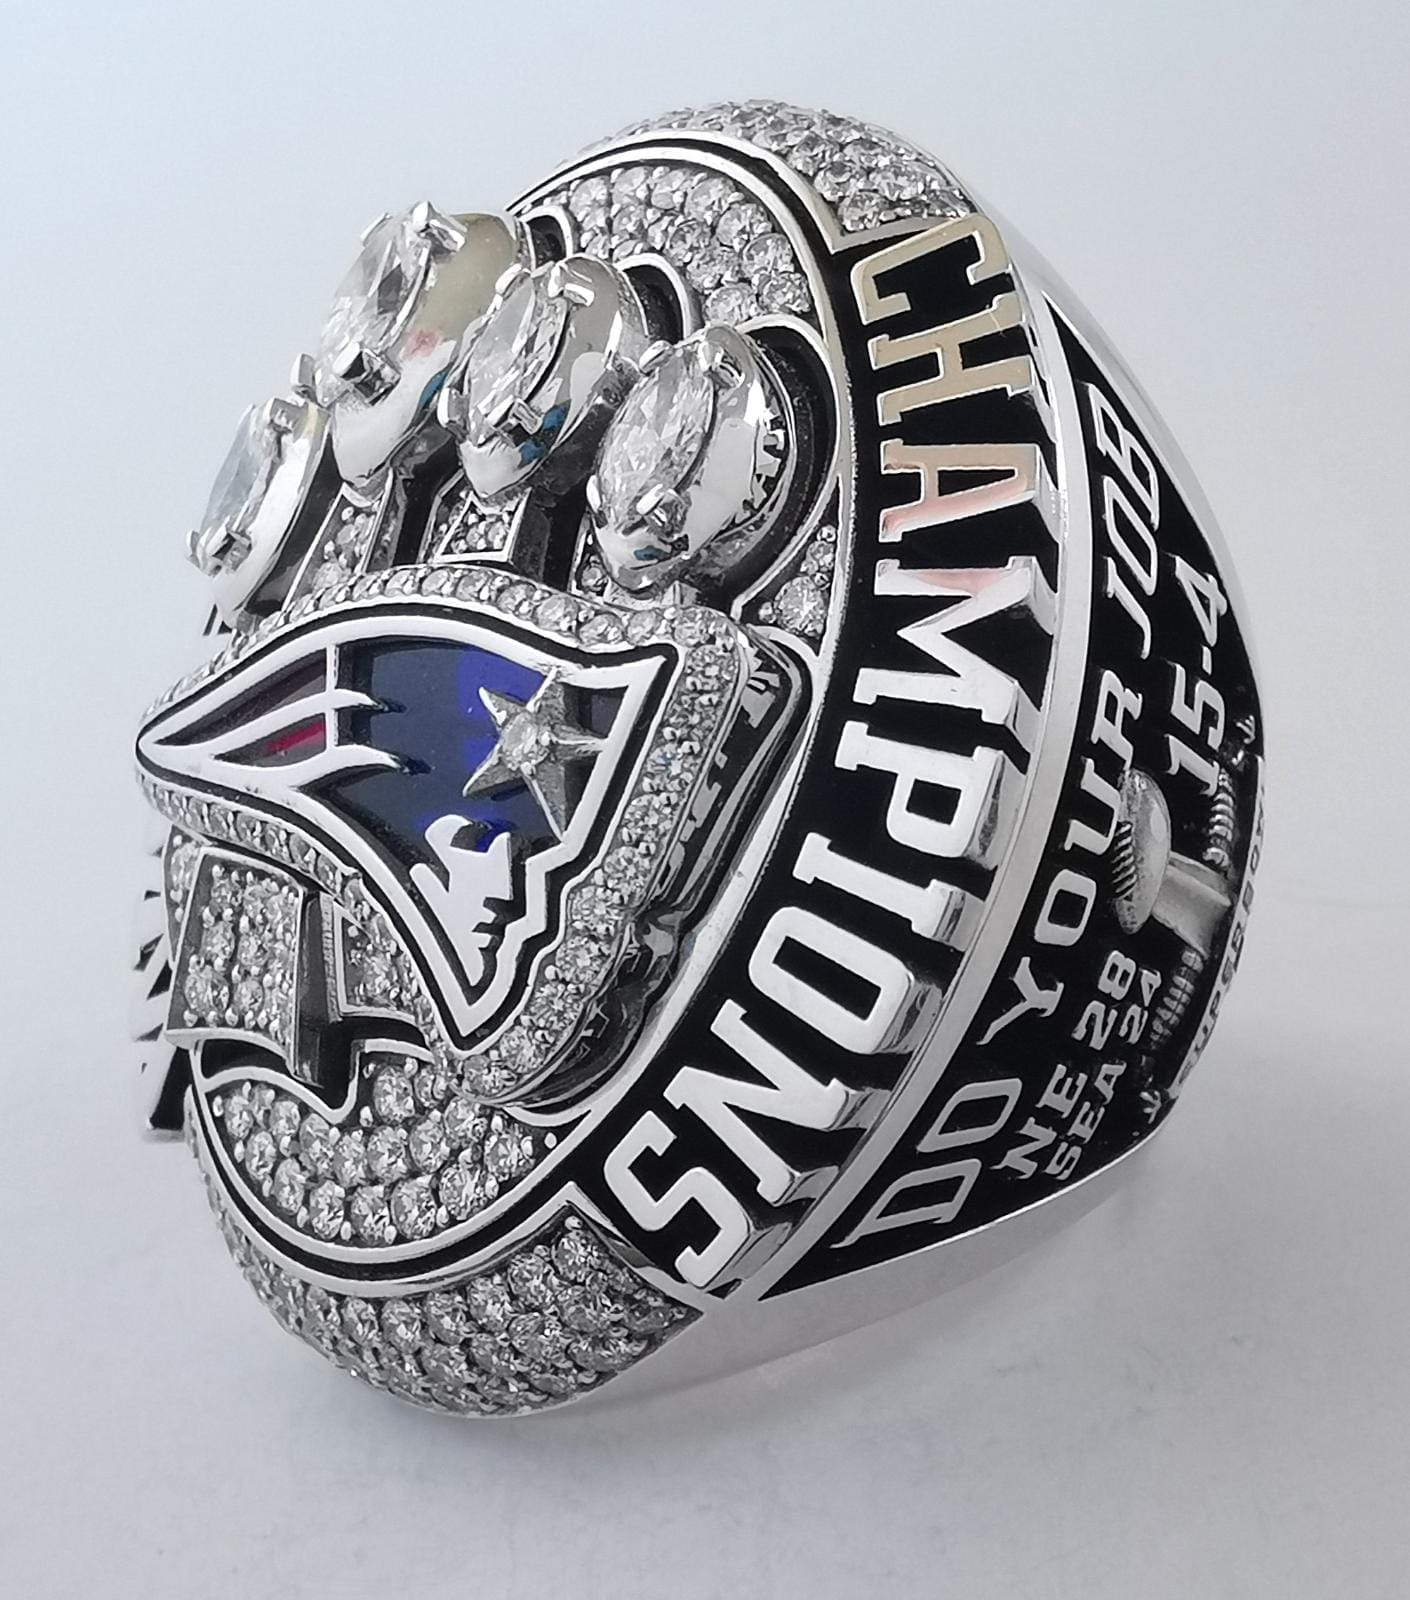 New England Patriots Fan Rings for sale | eBay